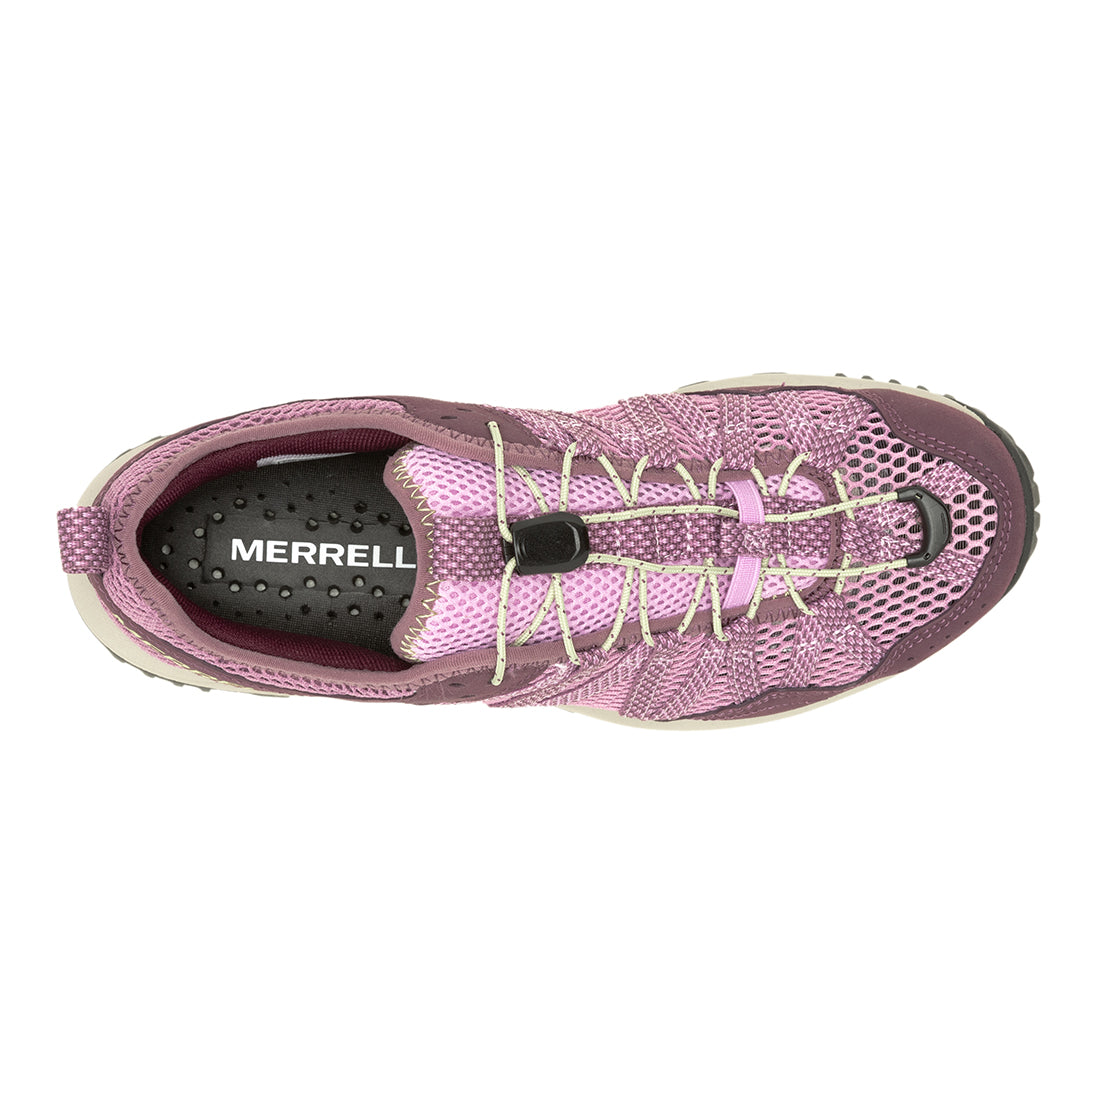 Merrell Wildwood Aerosport – Mauve/Willow Hydro Hiking Shoes